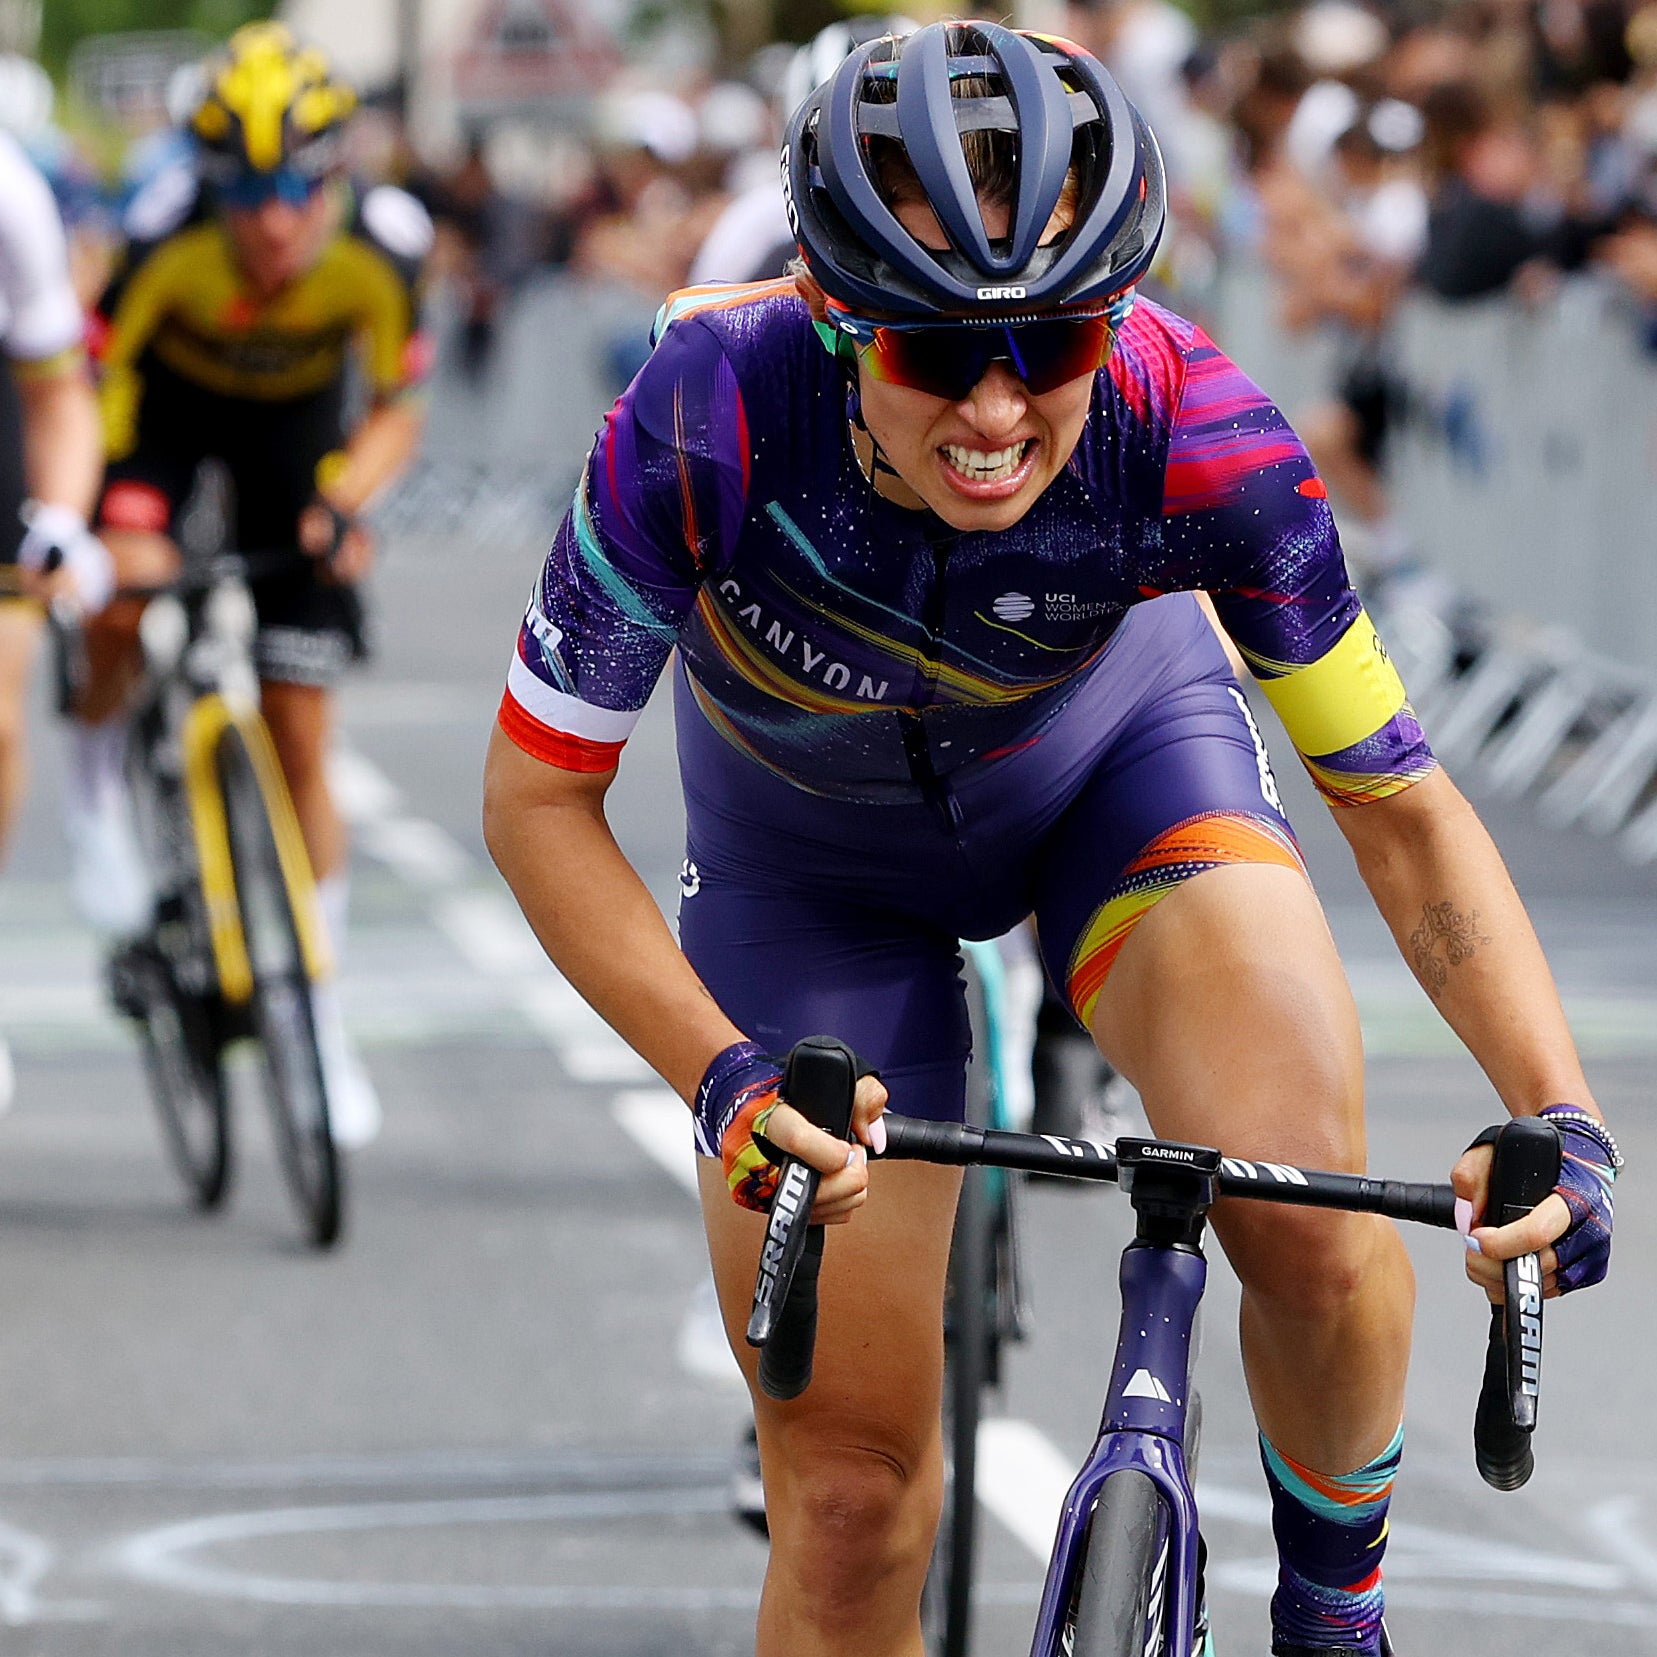 There’s Finally a Legitimate Tour de France for Women